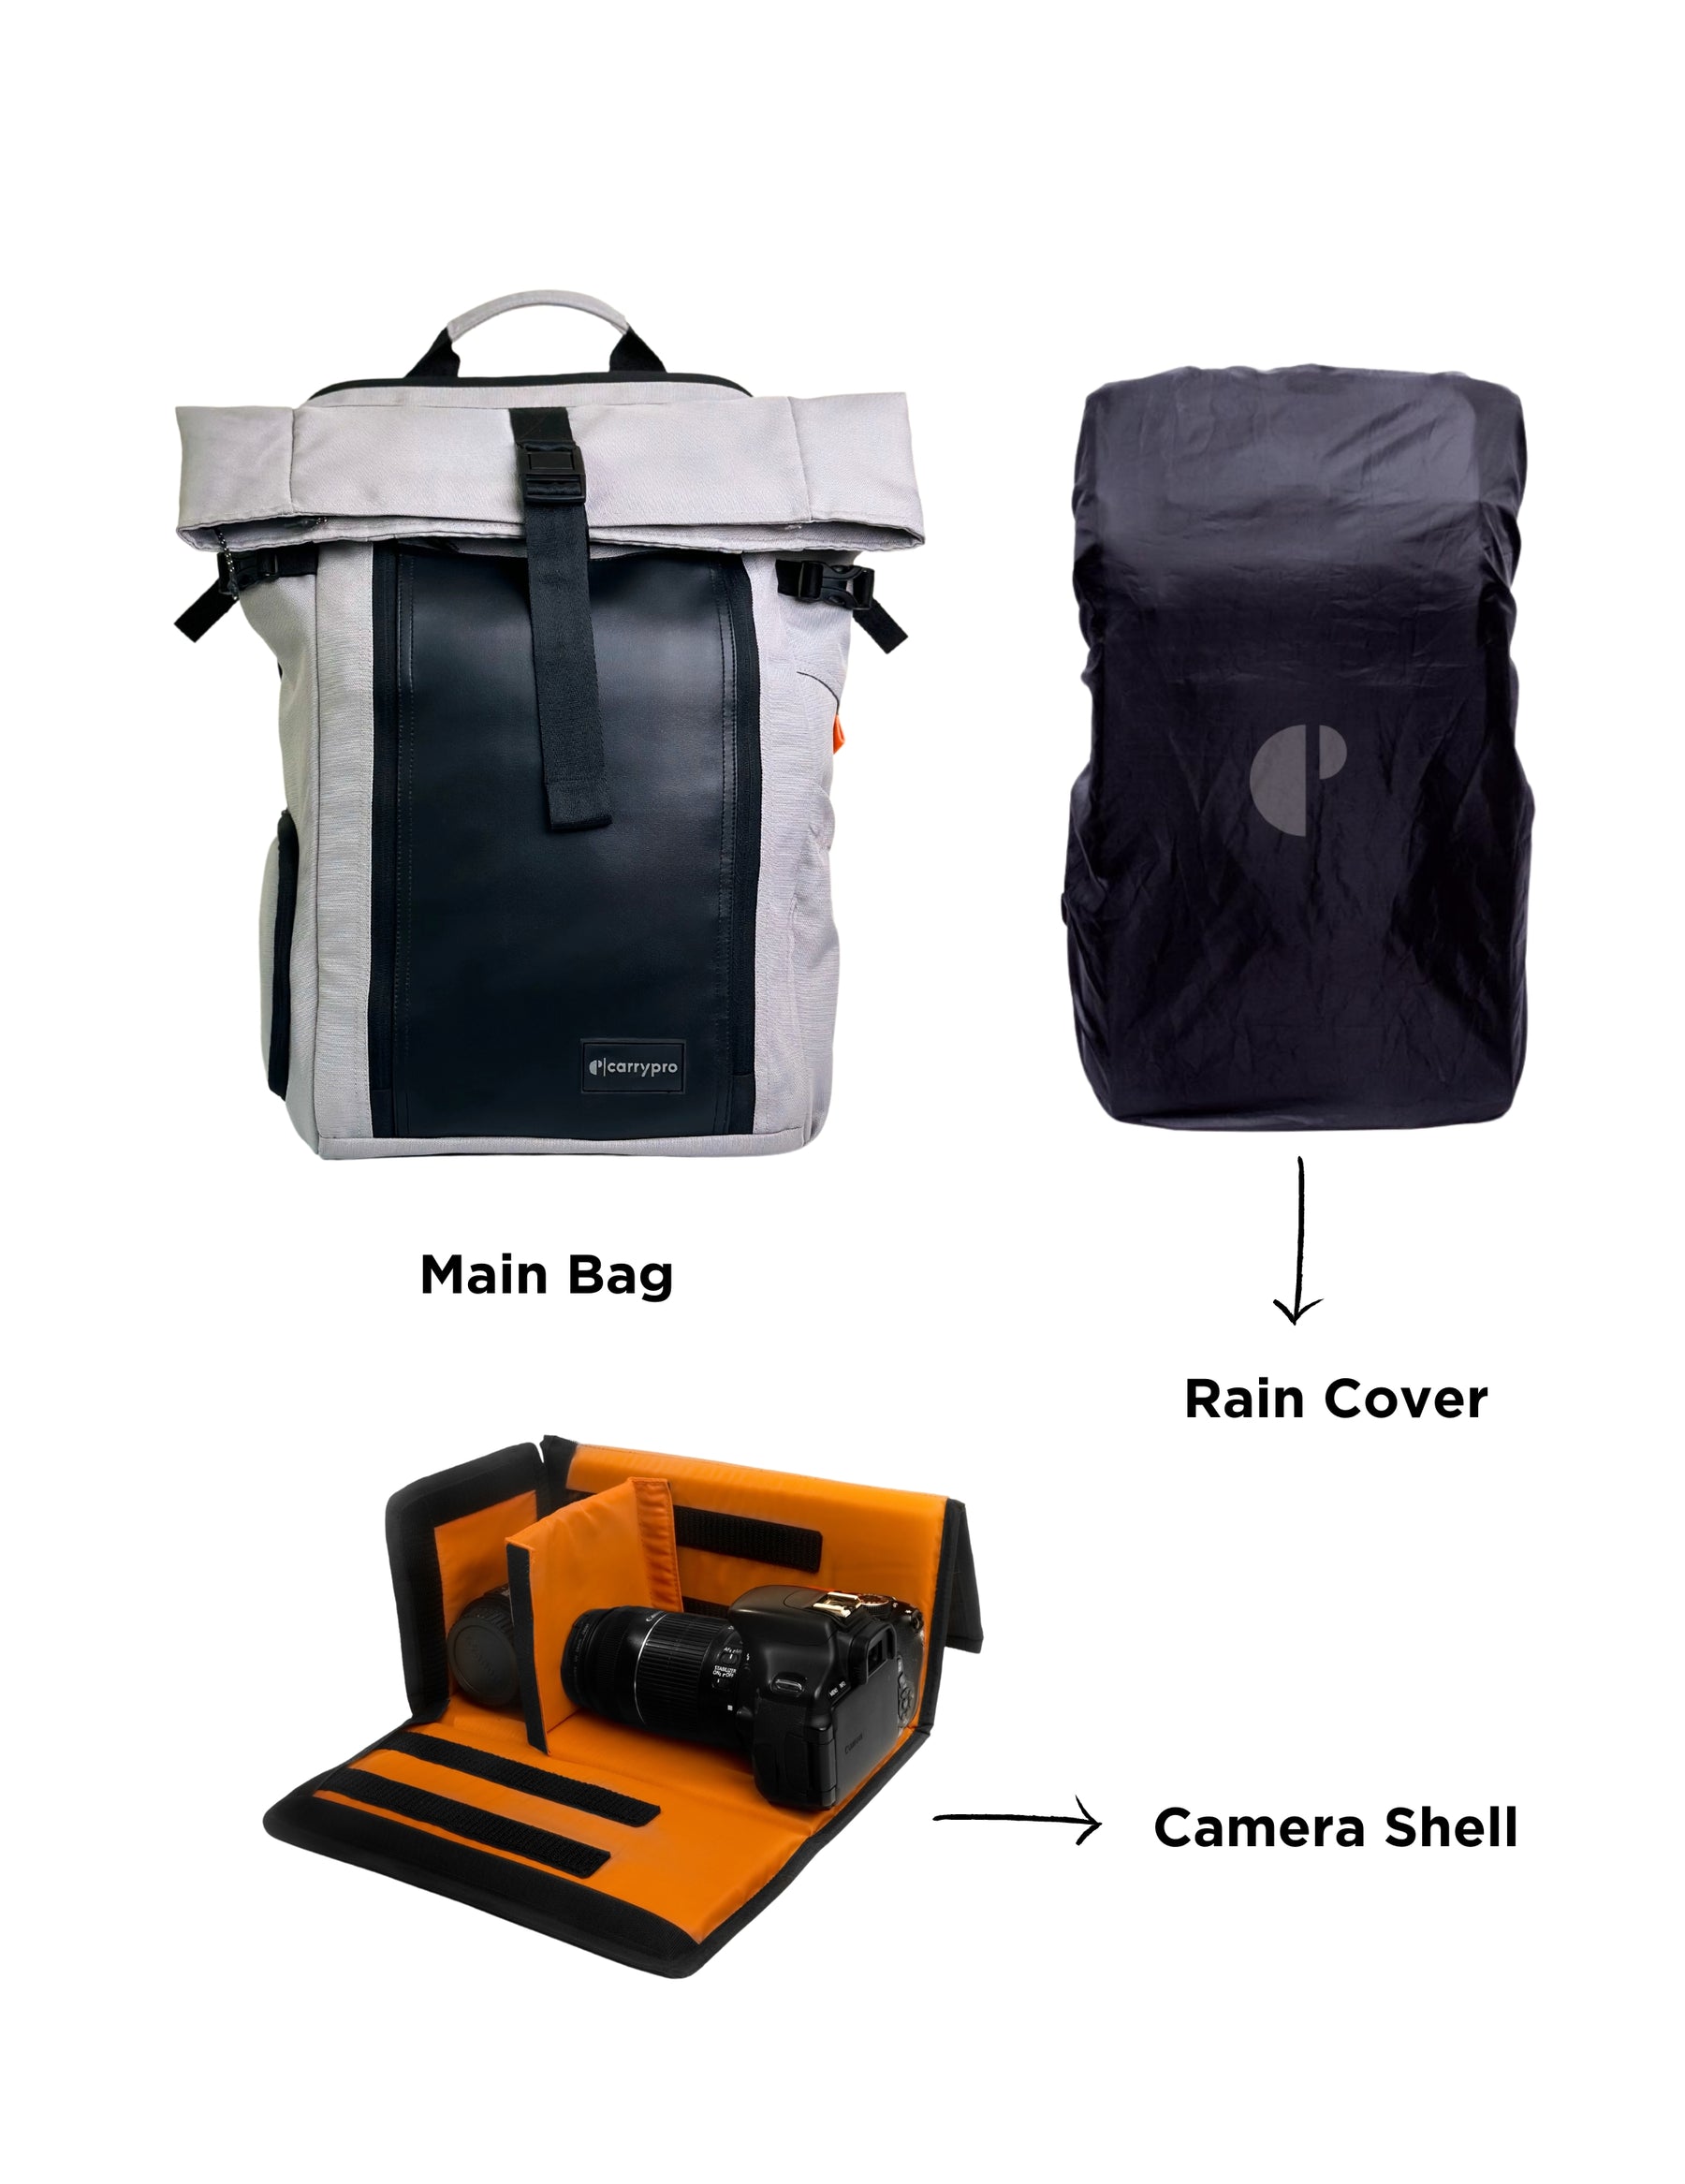 HOBO25 V3.0 Everyday Utility Rolltop Backpack(New)